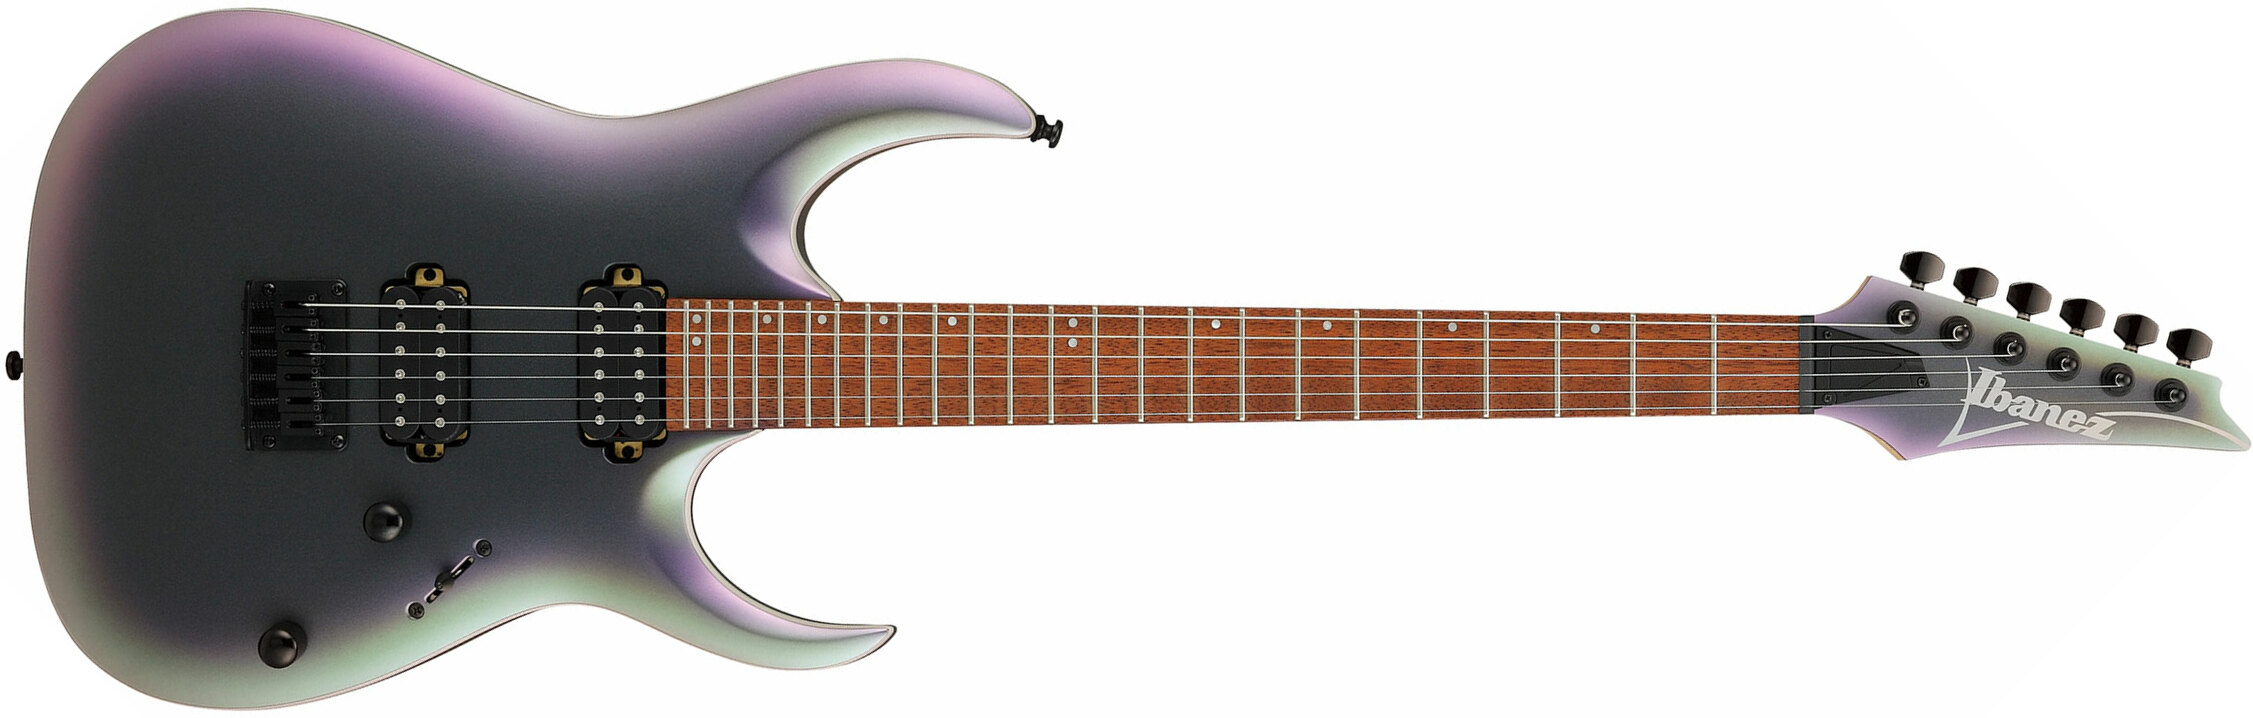 Ibanez Rga42ex Bam Standard Ht Hh Jat - Black Aurora Burst Matte - Str shape electric guitar - Main picture